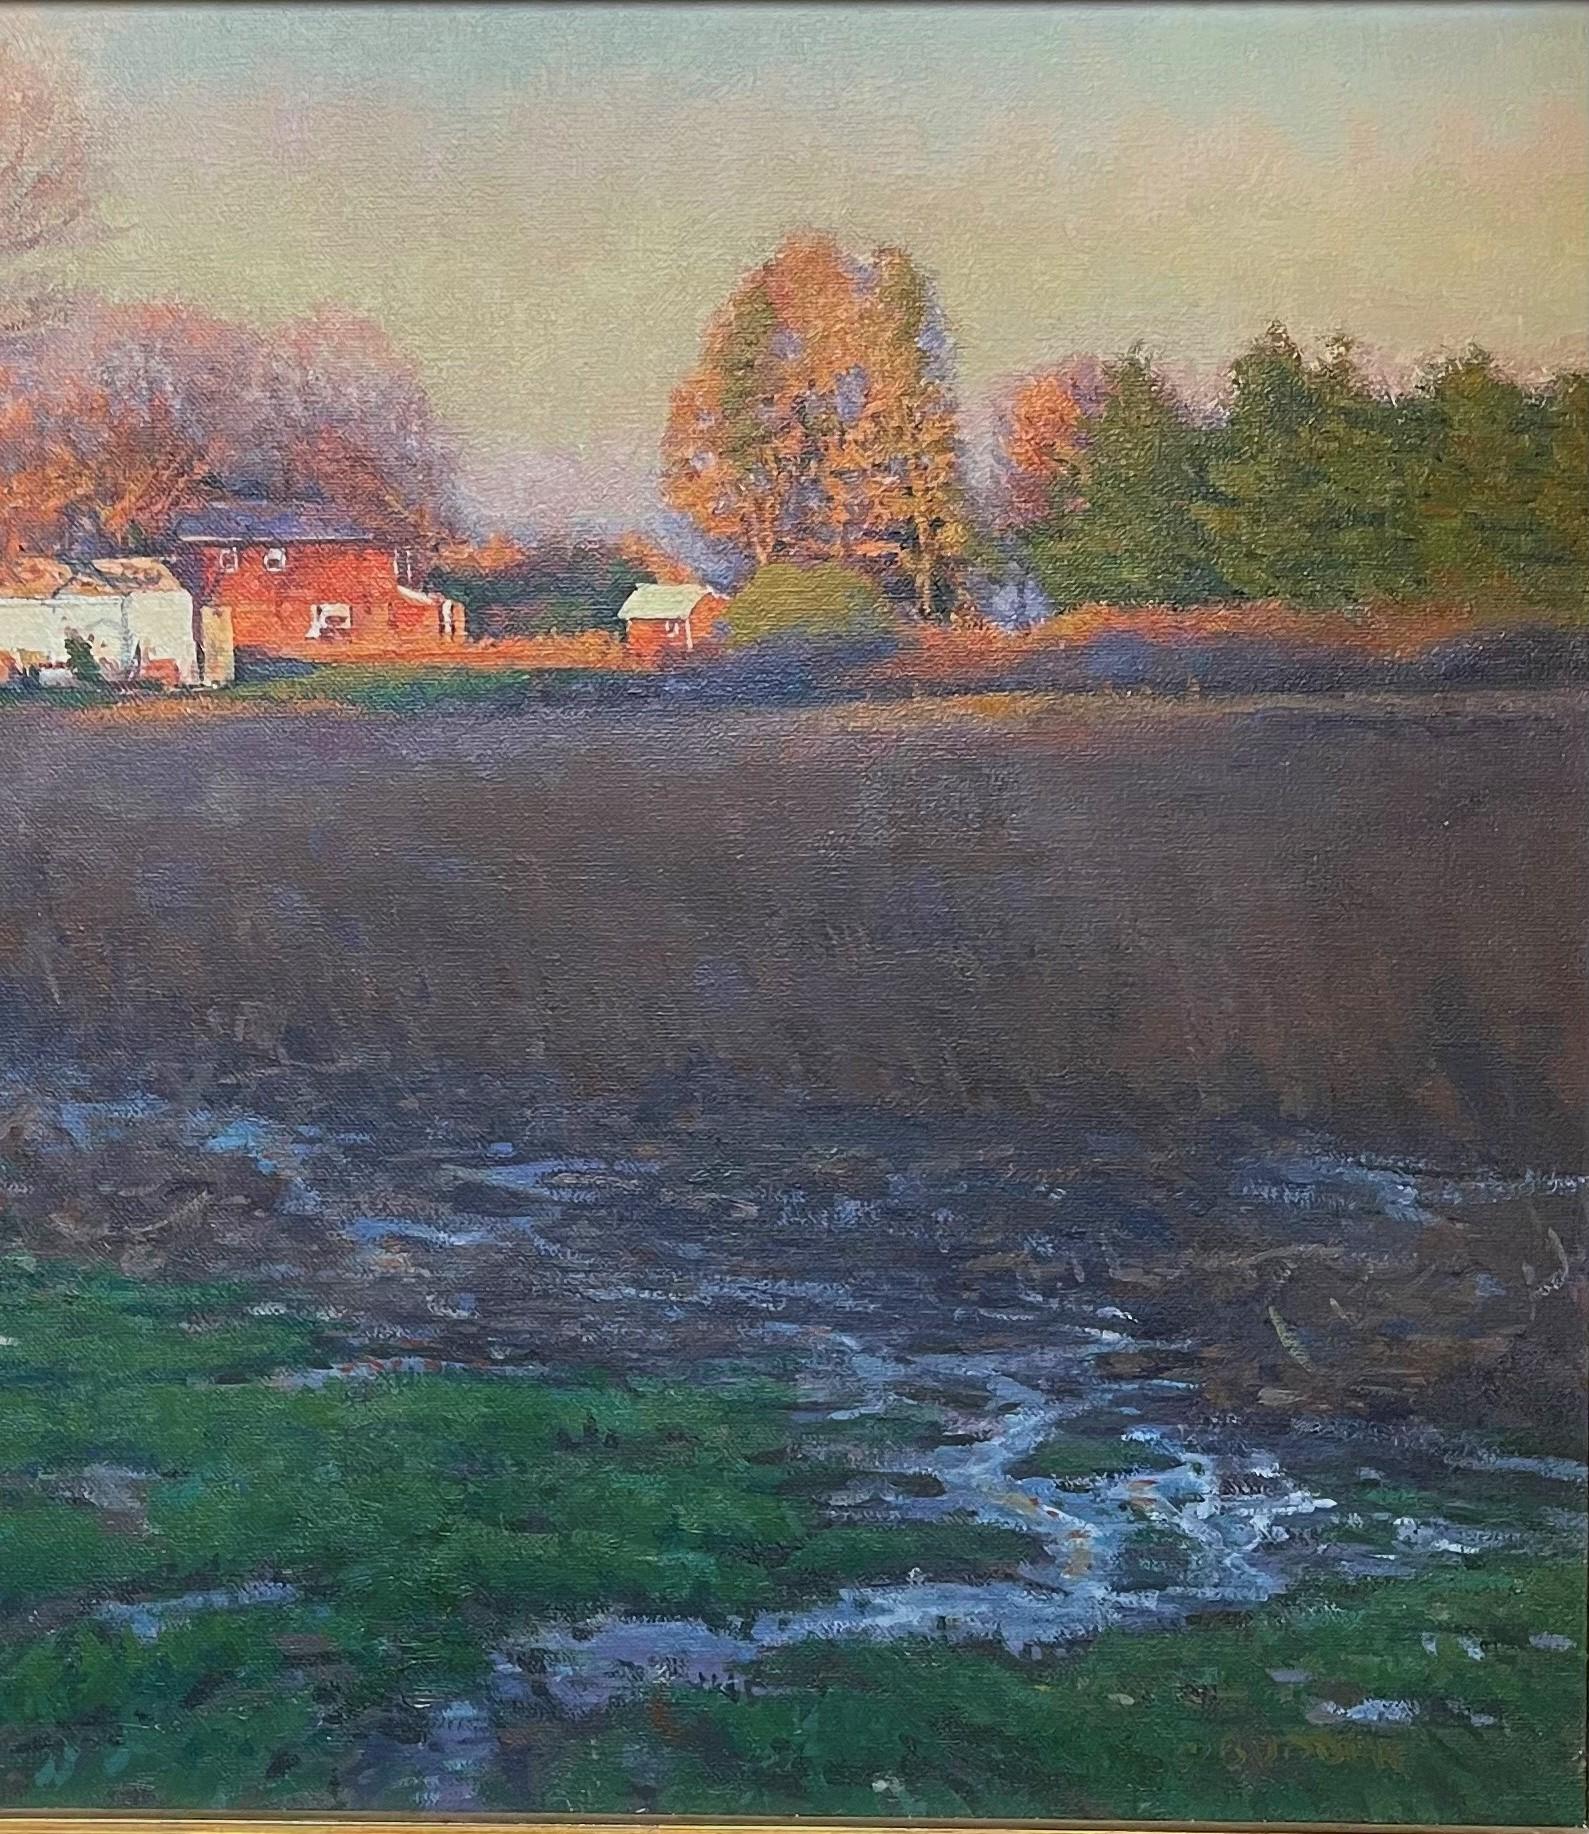  Impressionistic Rural Farm Landscape Oil Painting Michael Budden Shadow & Light For Sale 3